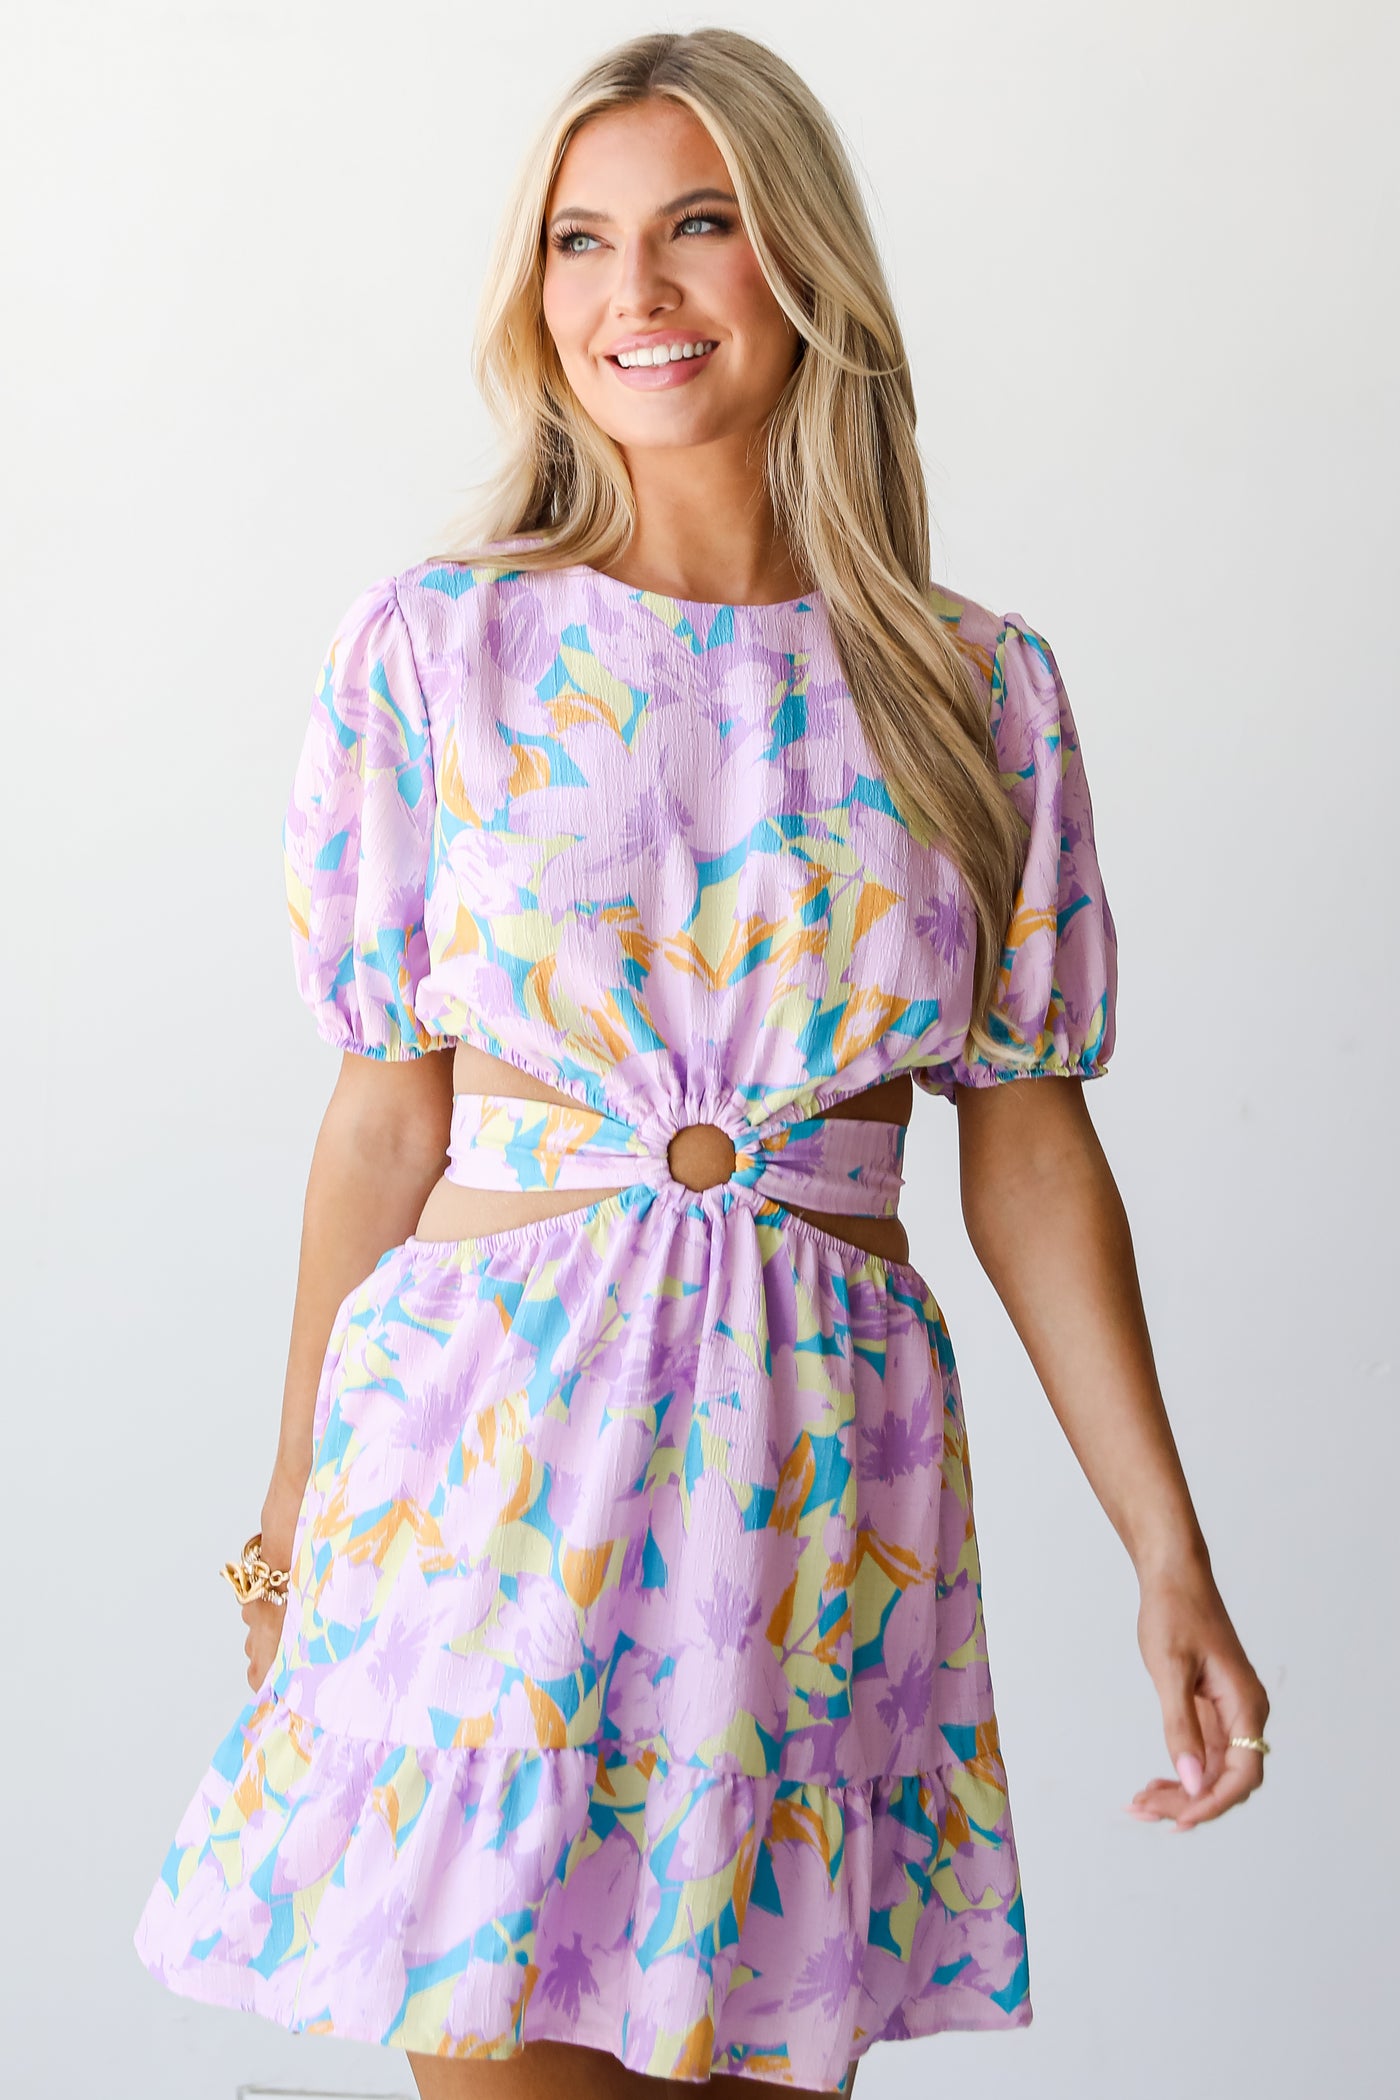 Floral Cutout Mini Dress on dress up model